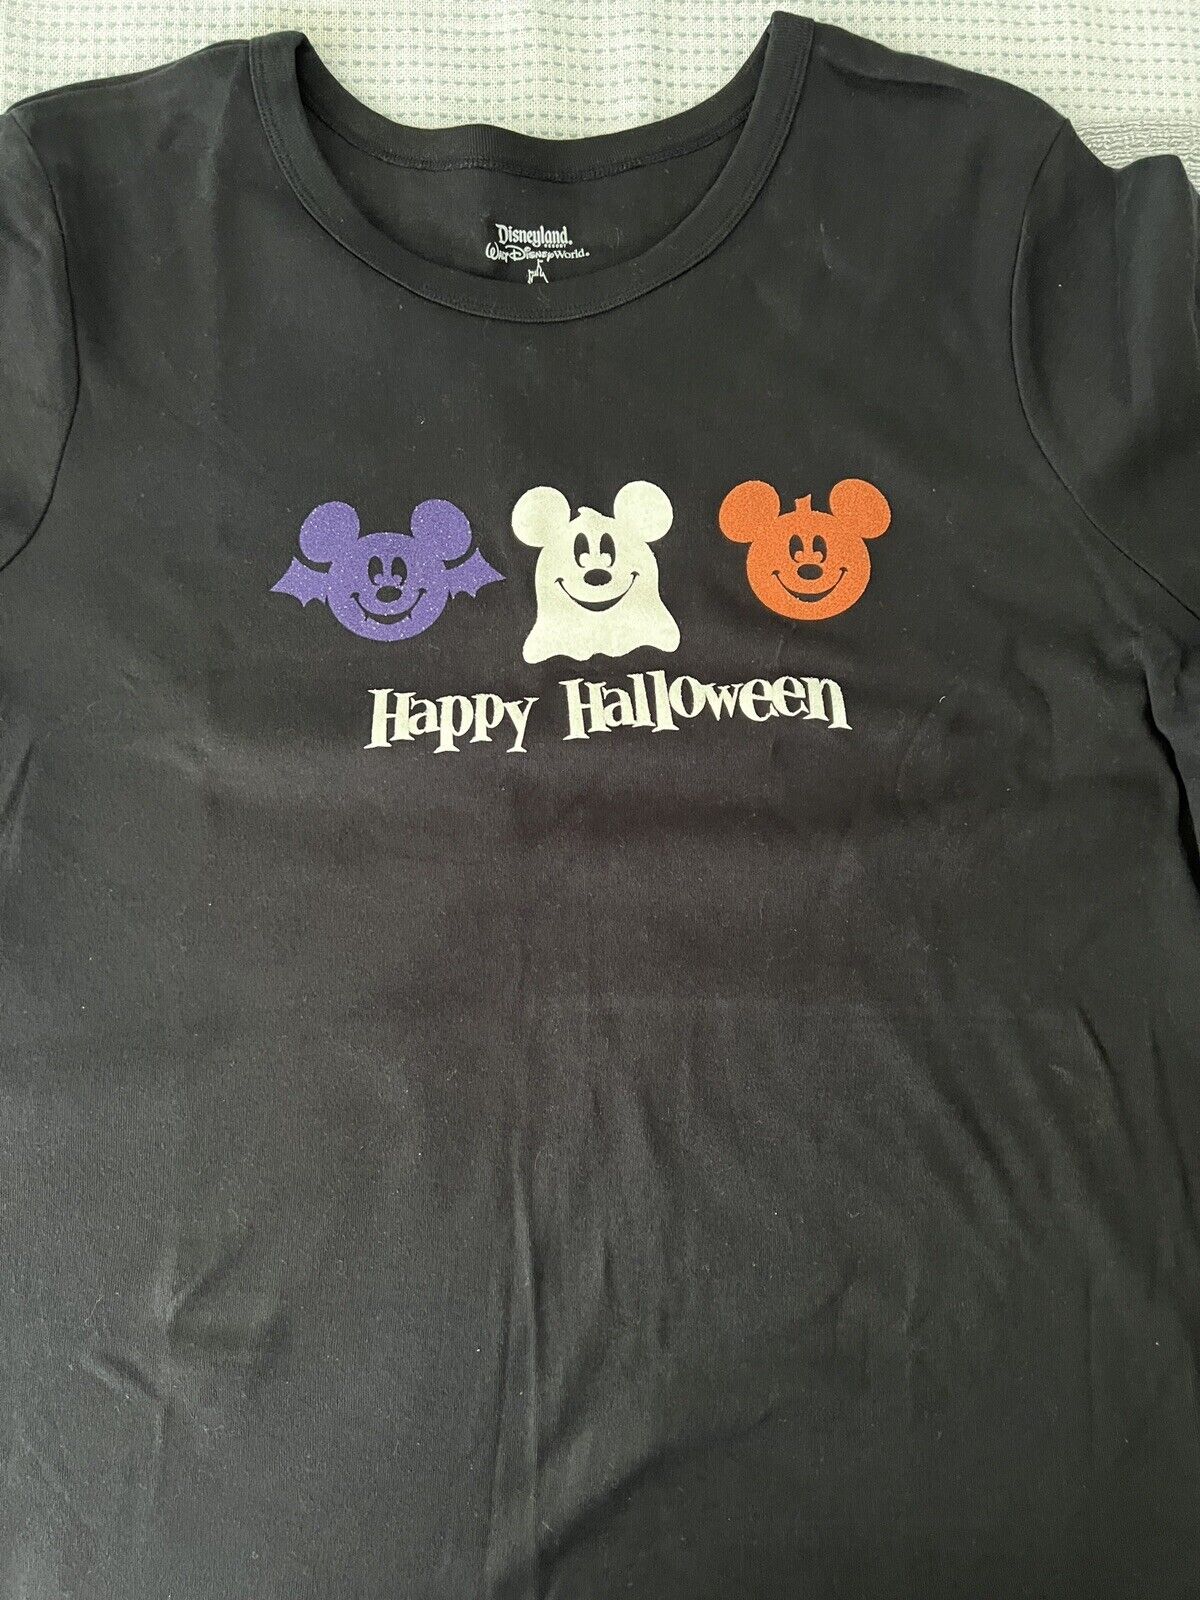 Disneyland Mickey Mouse Halloween 2009 T Shirt - 2x